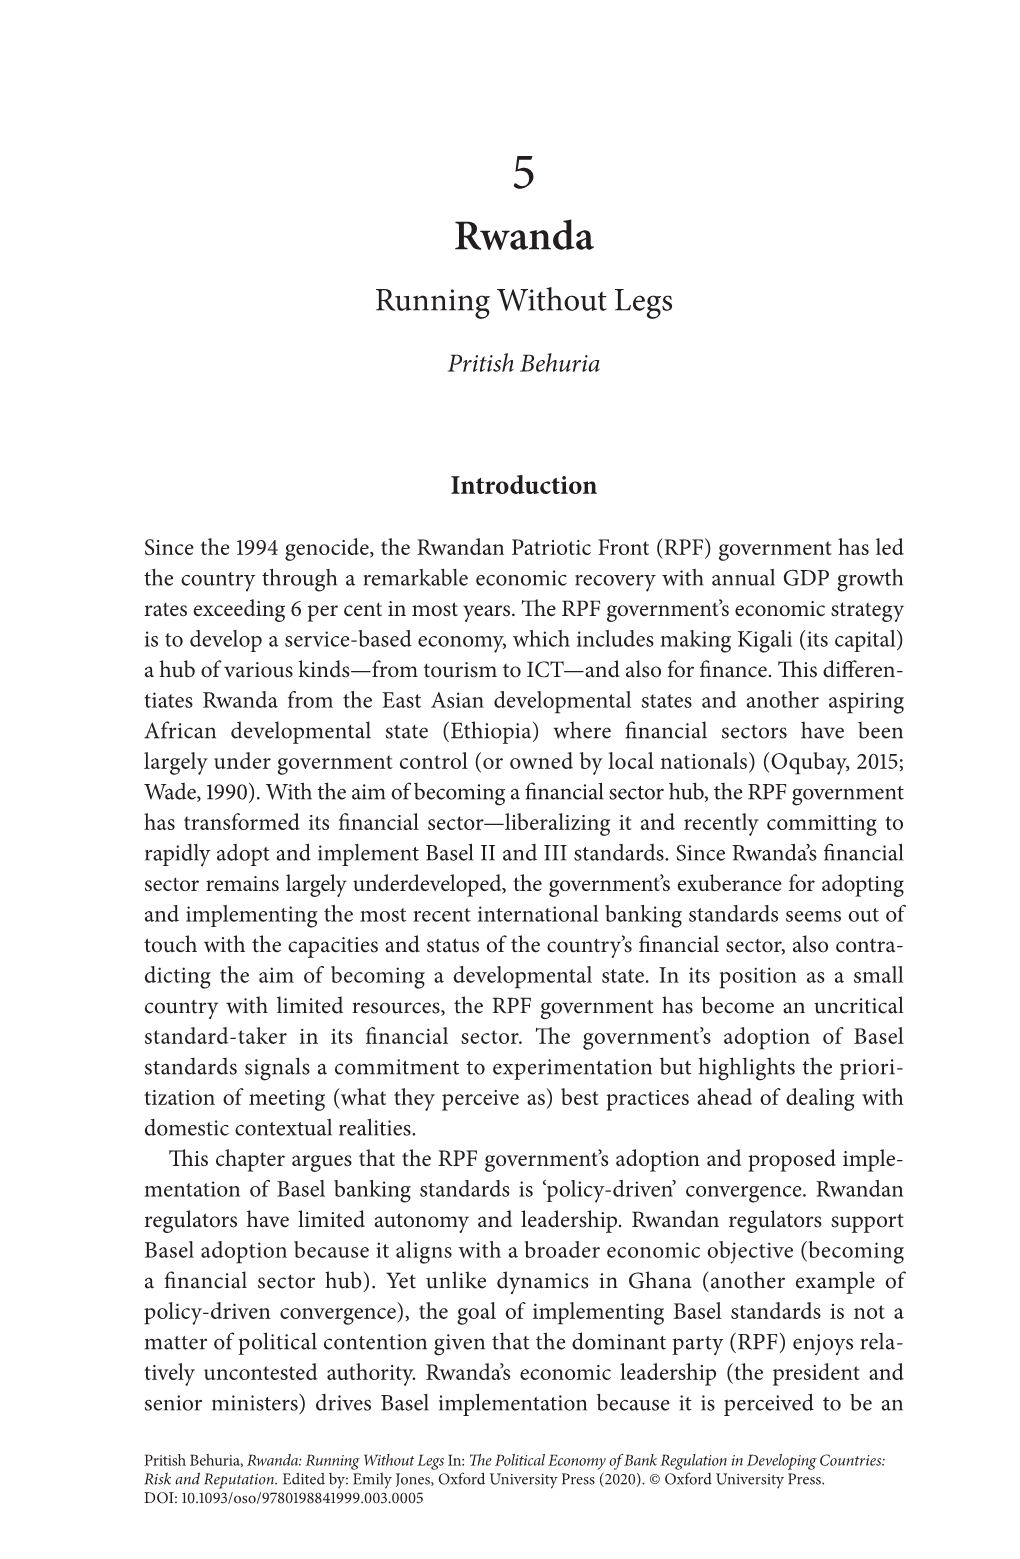 Rwanda Running Without Legs